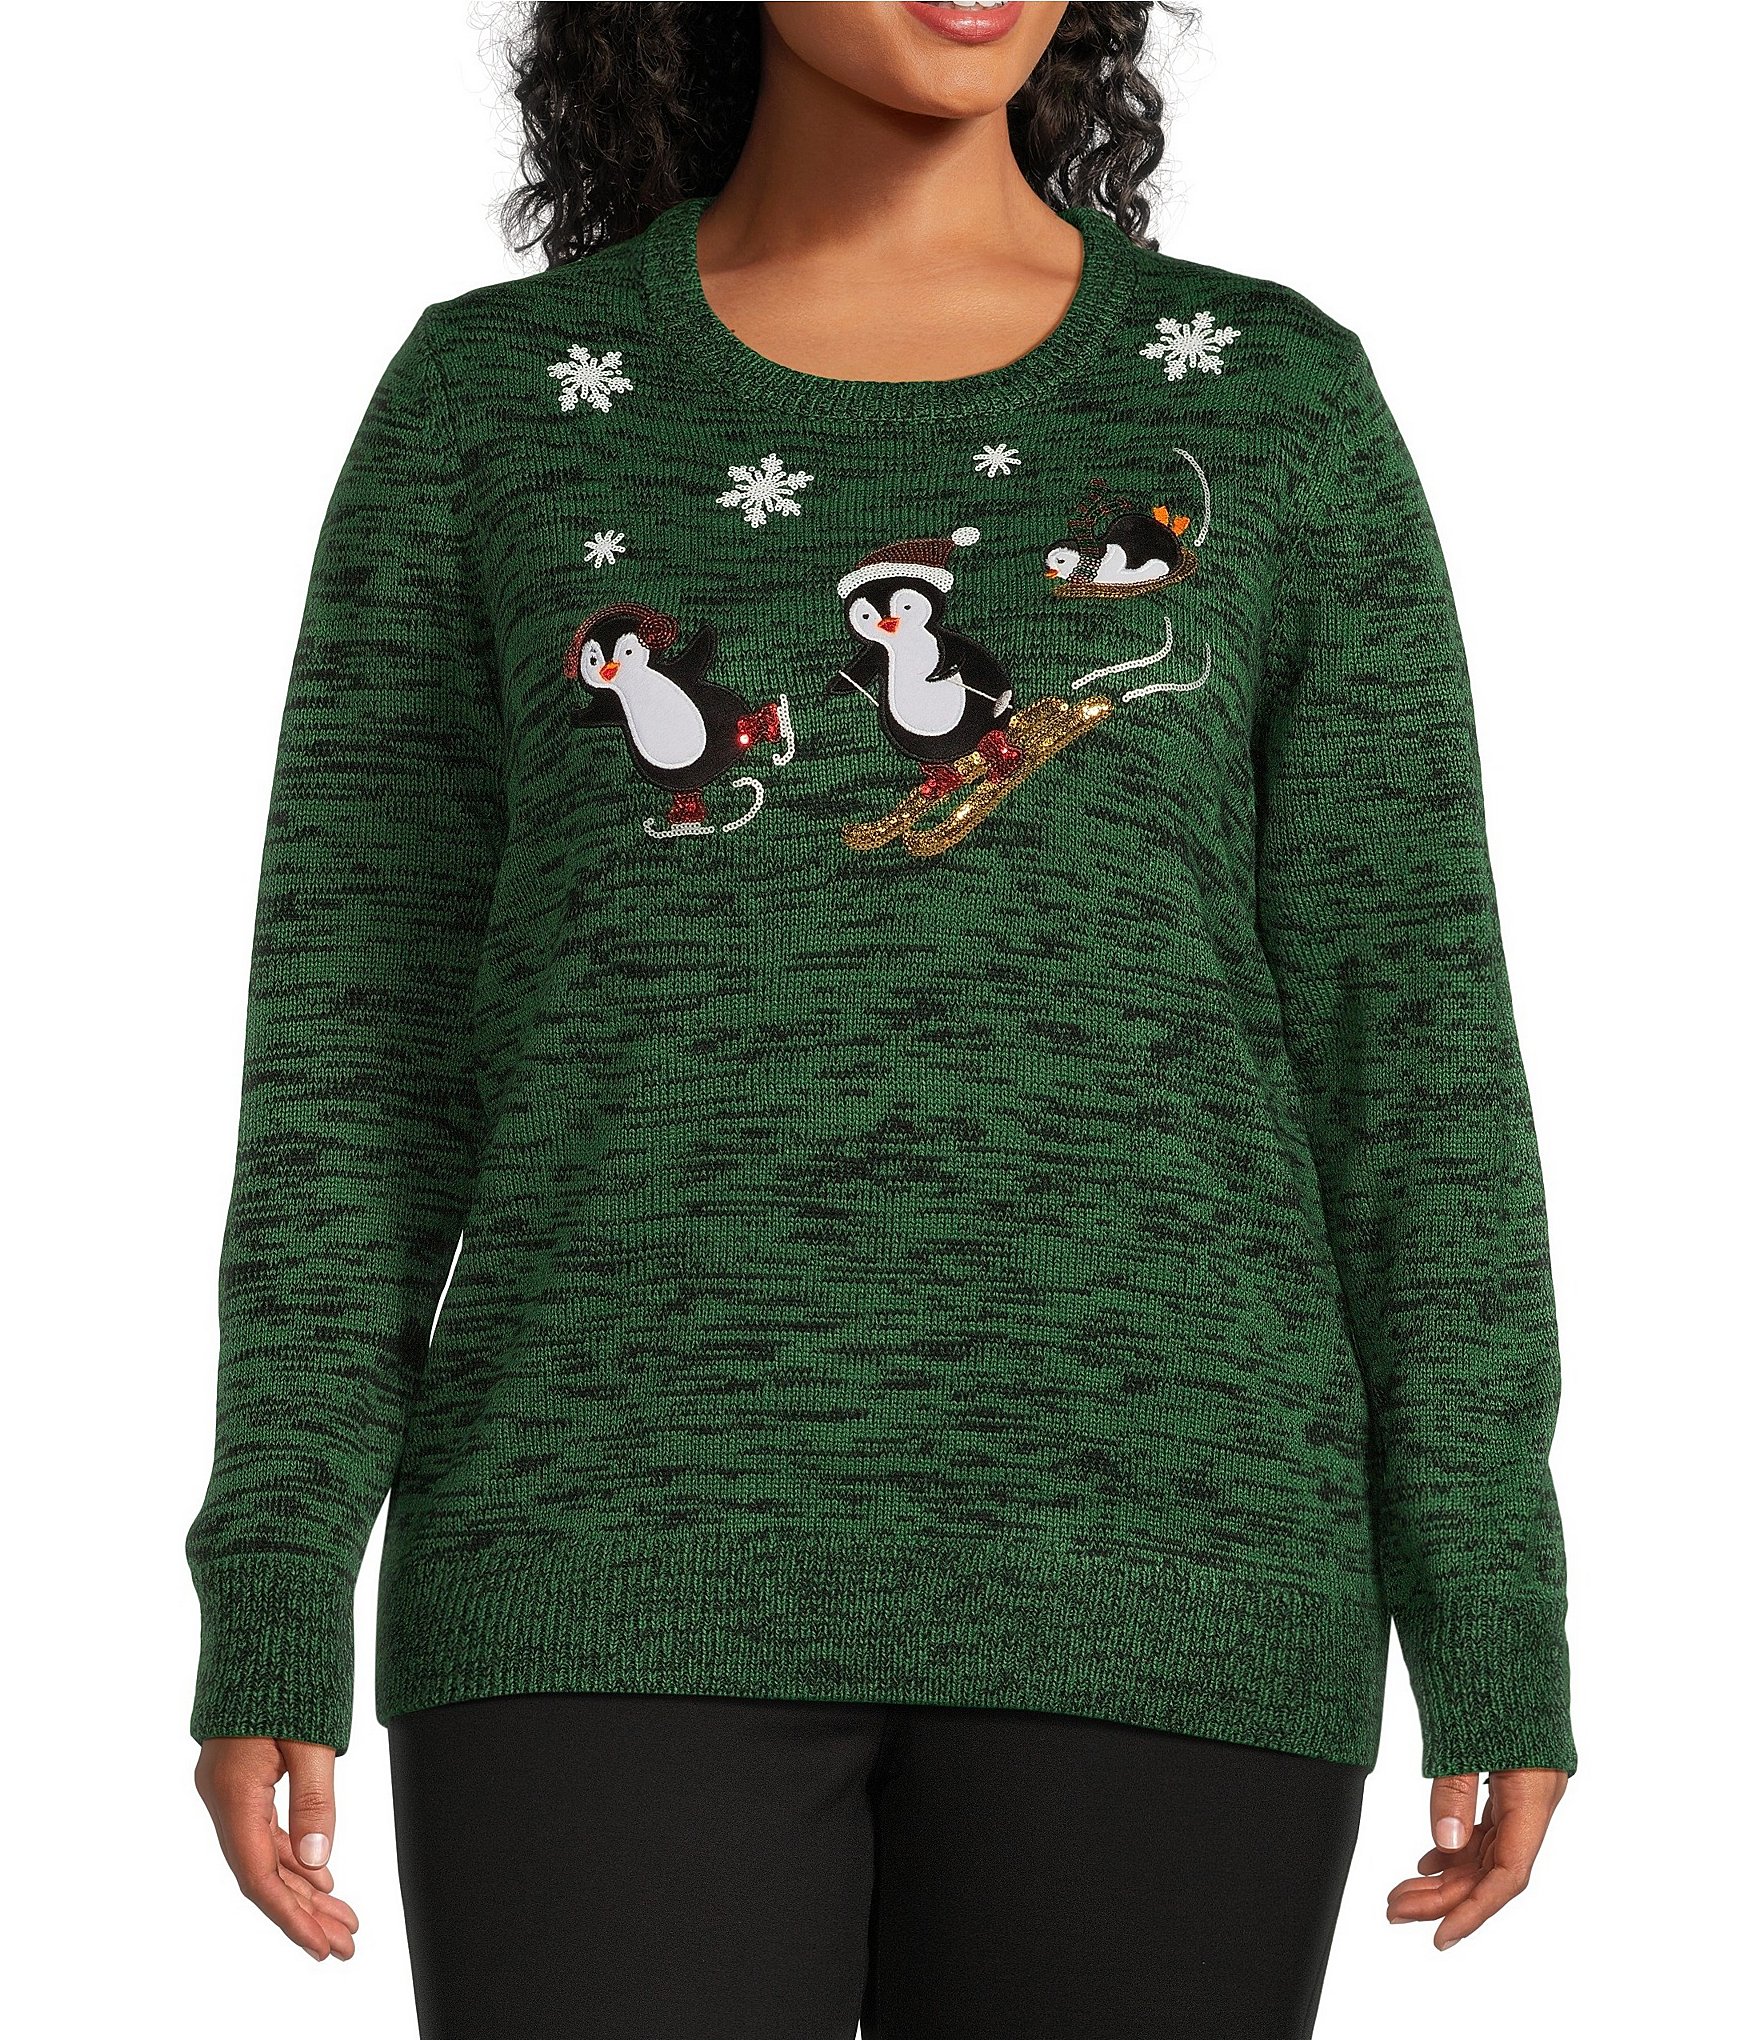 Penguin Sweater Women